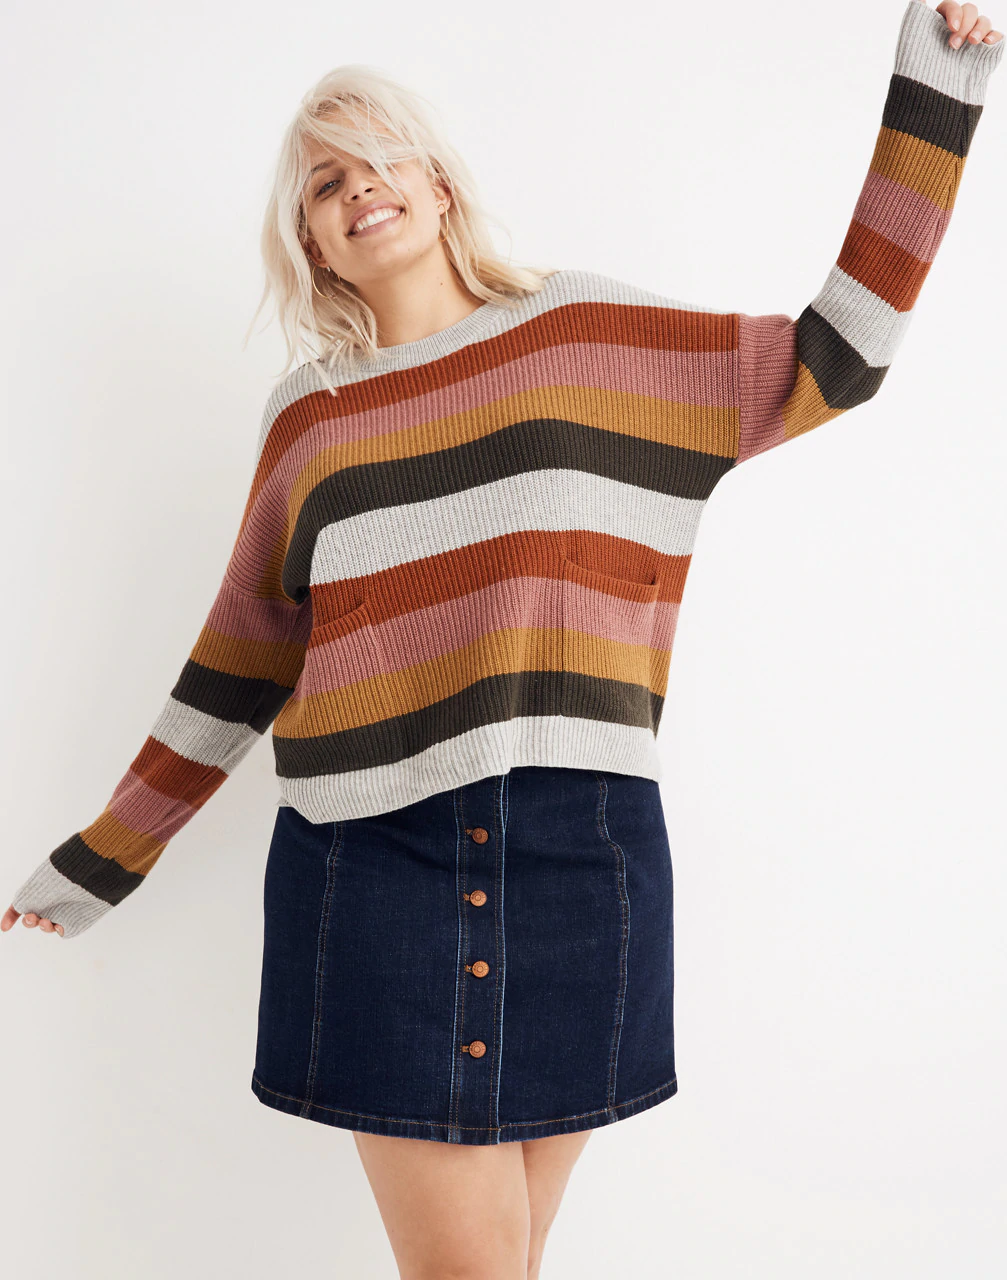 Cute Striped Sweater Styles